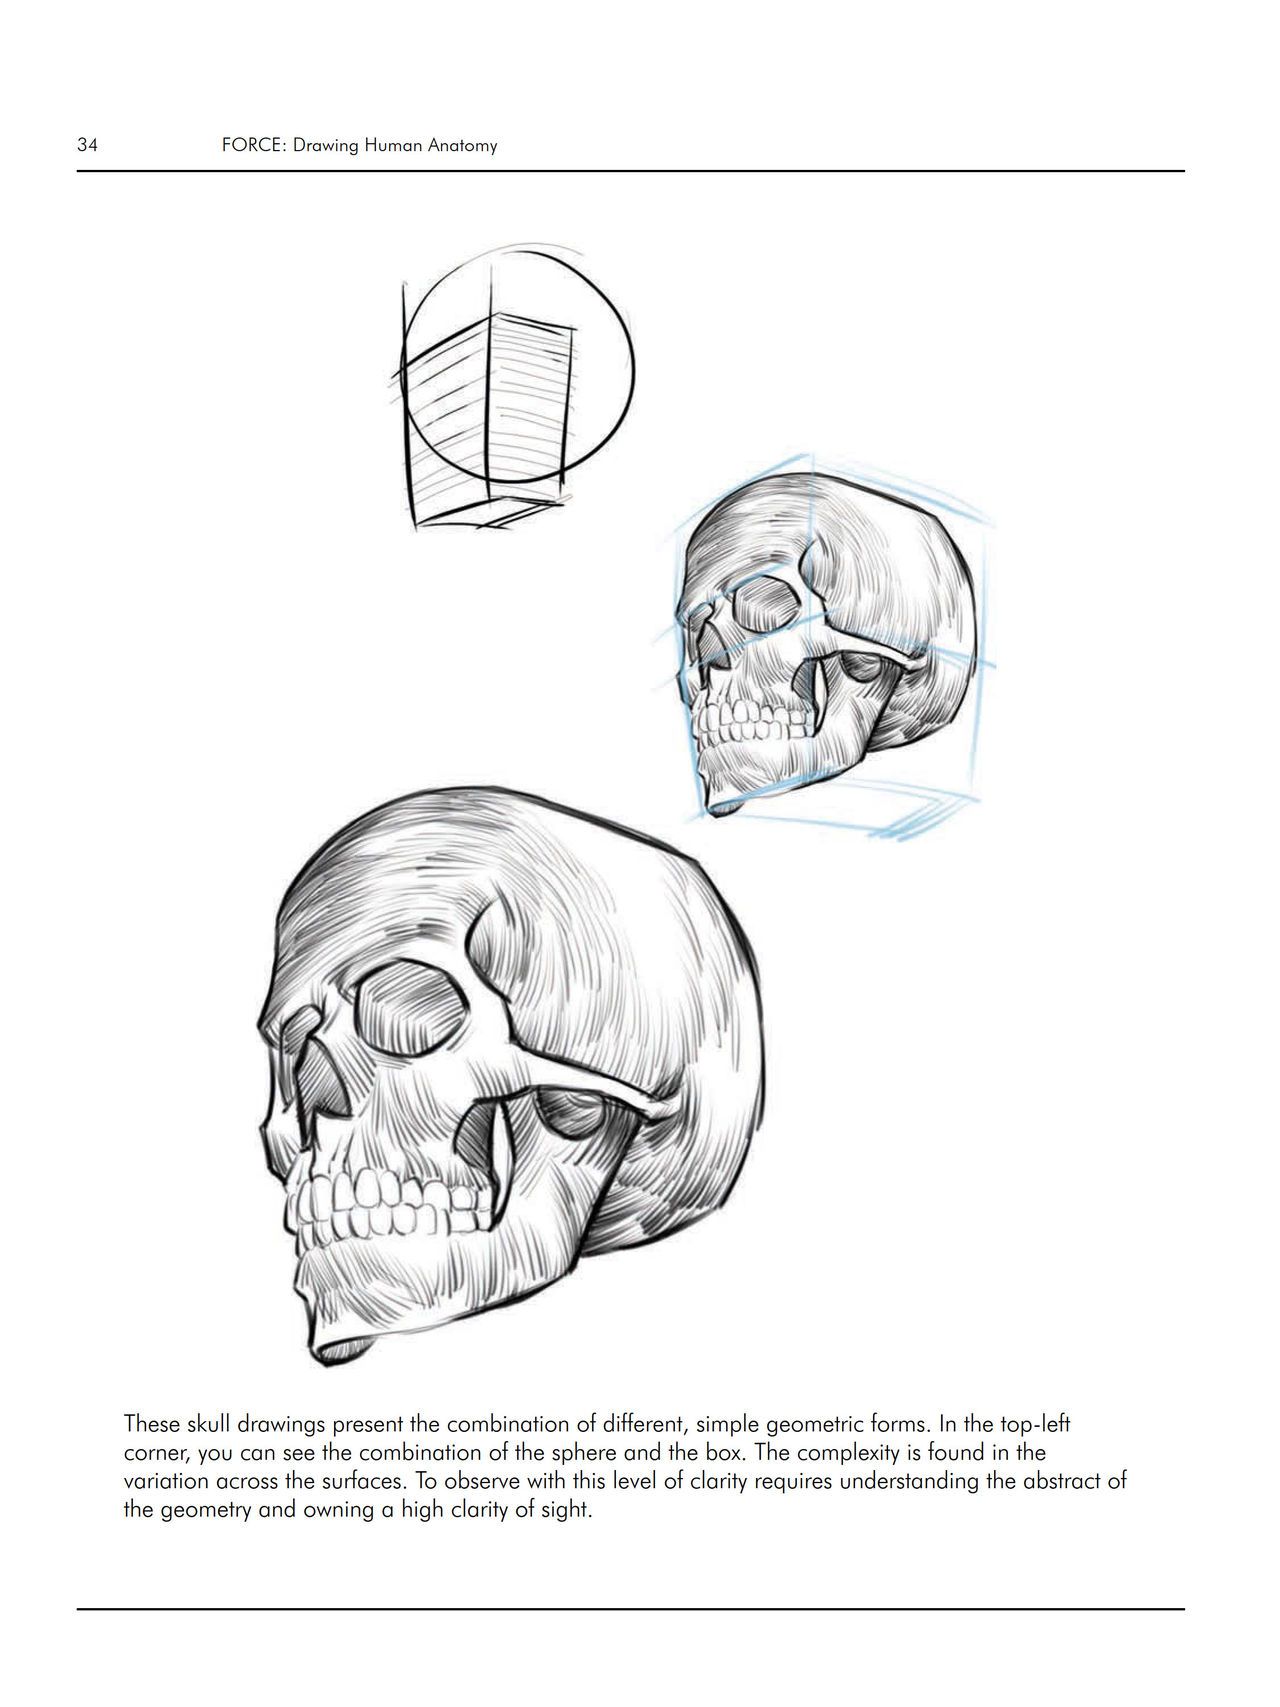 Force. Drawing human anatomy - Michael D. Mattesi [Digital] 55